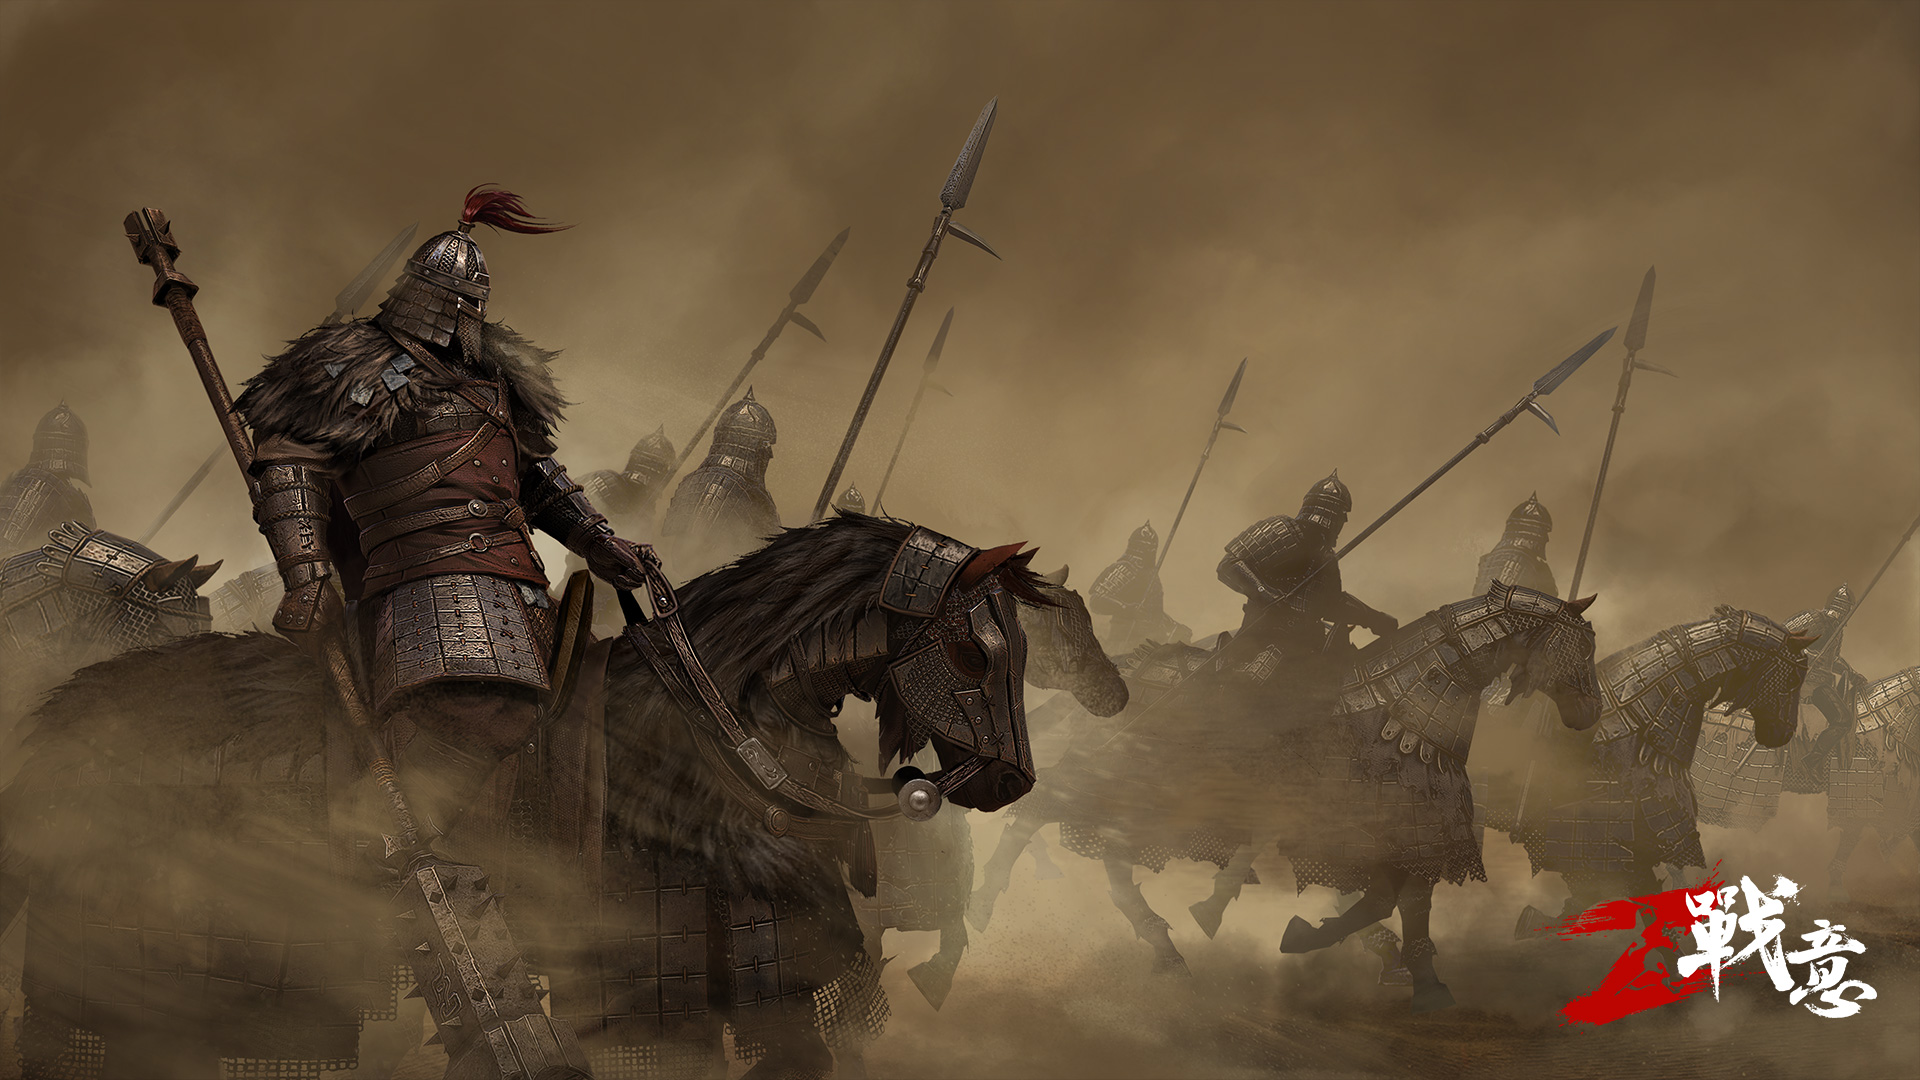 Conqueror S Blade HD Wallpaper Background Image Id